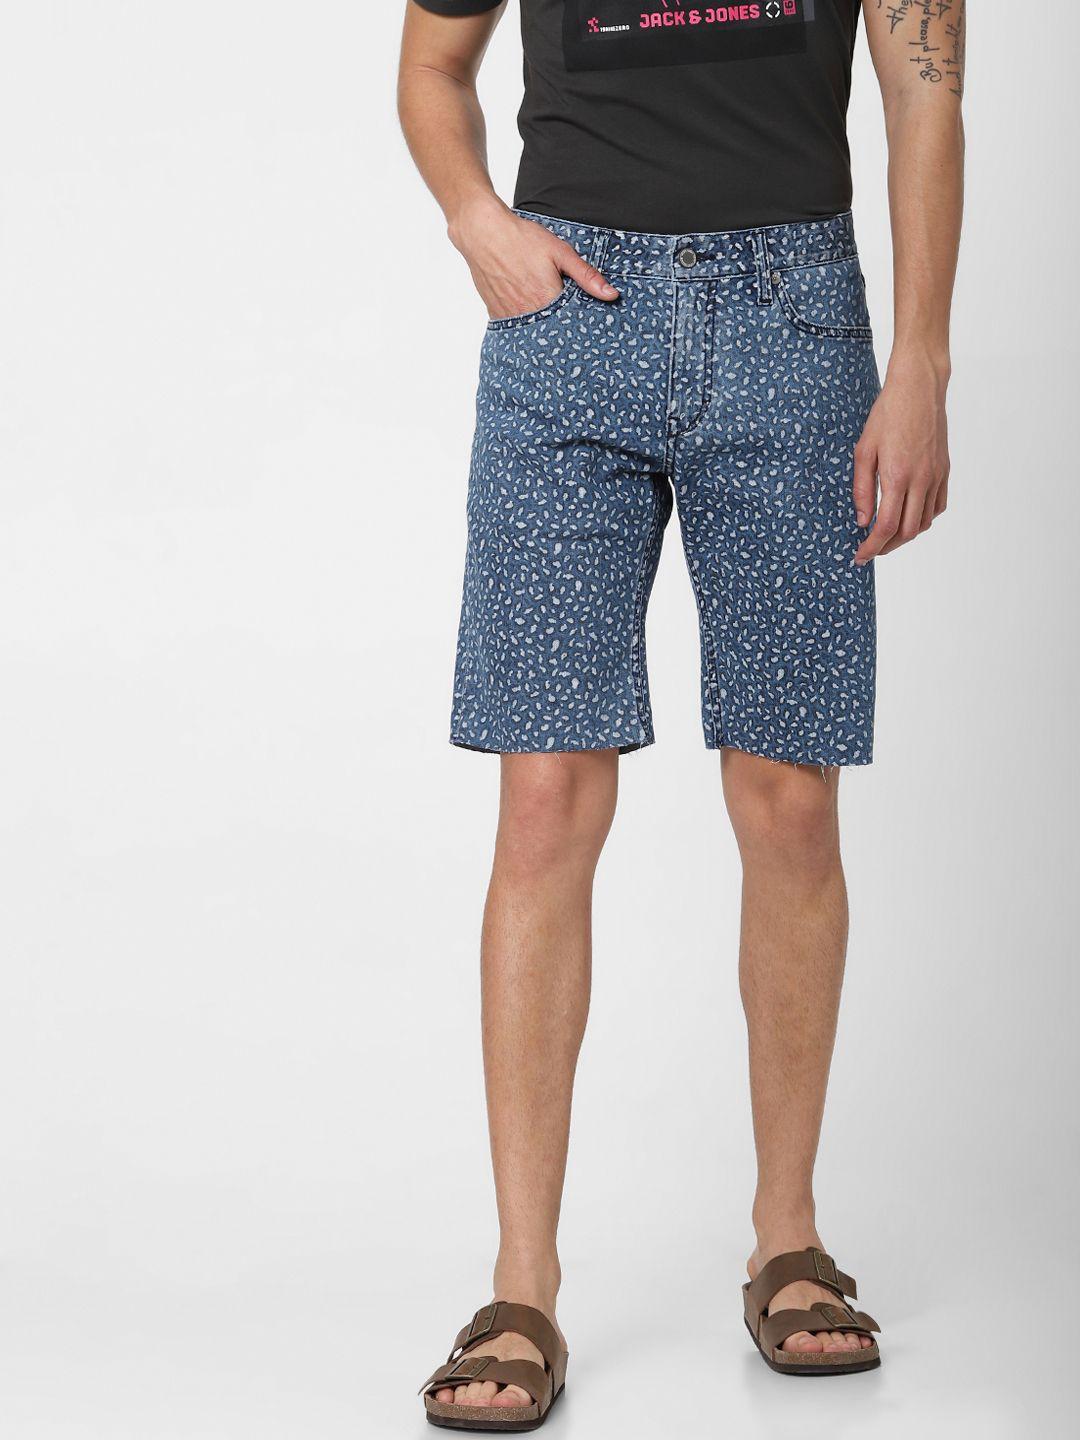 jack-&-jones-men-blue-printed-regular-fit-shorts